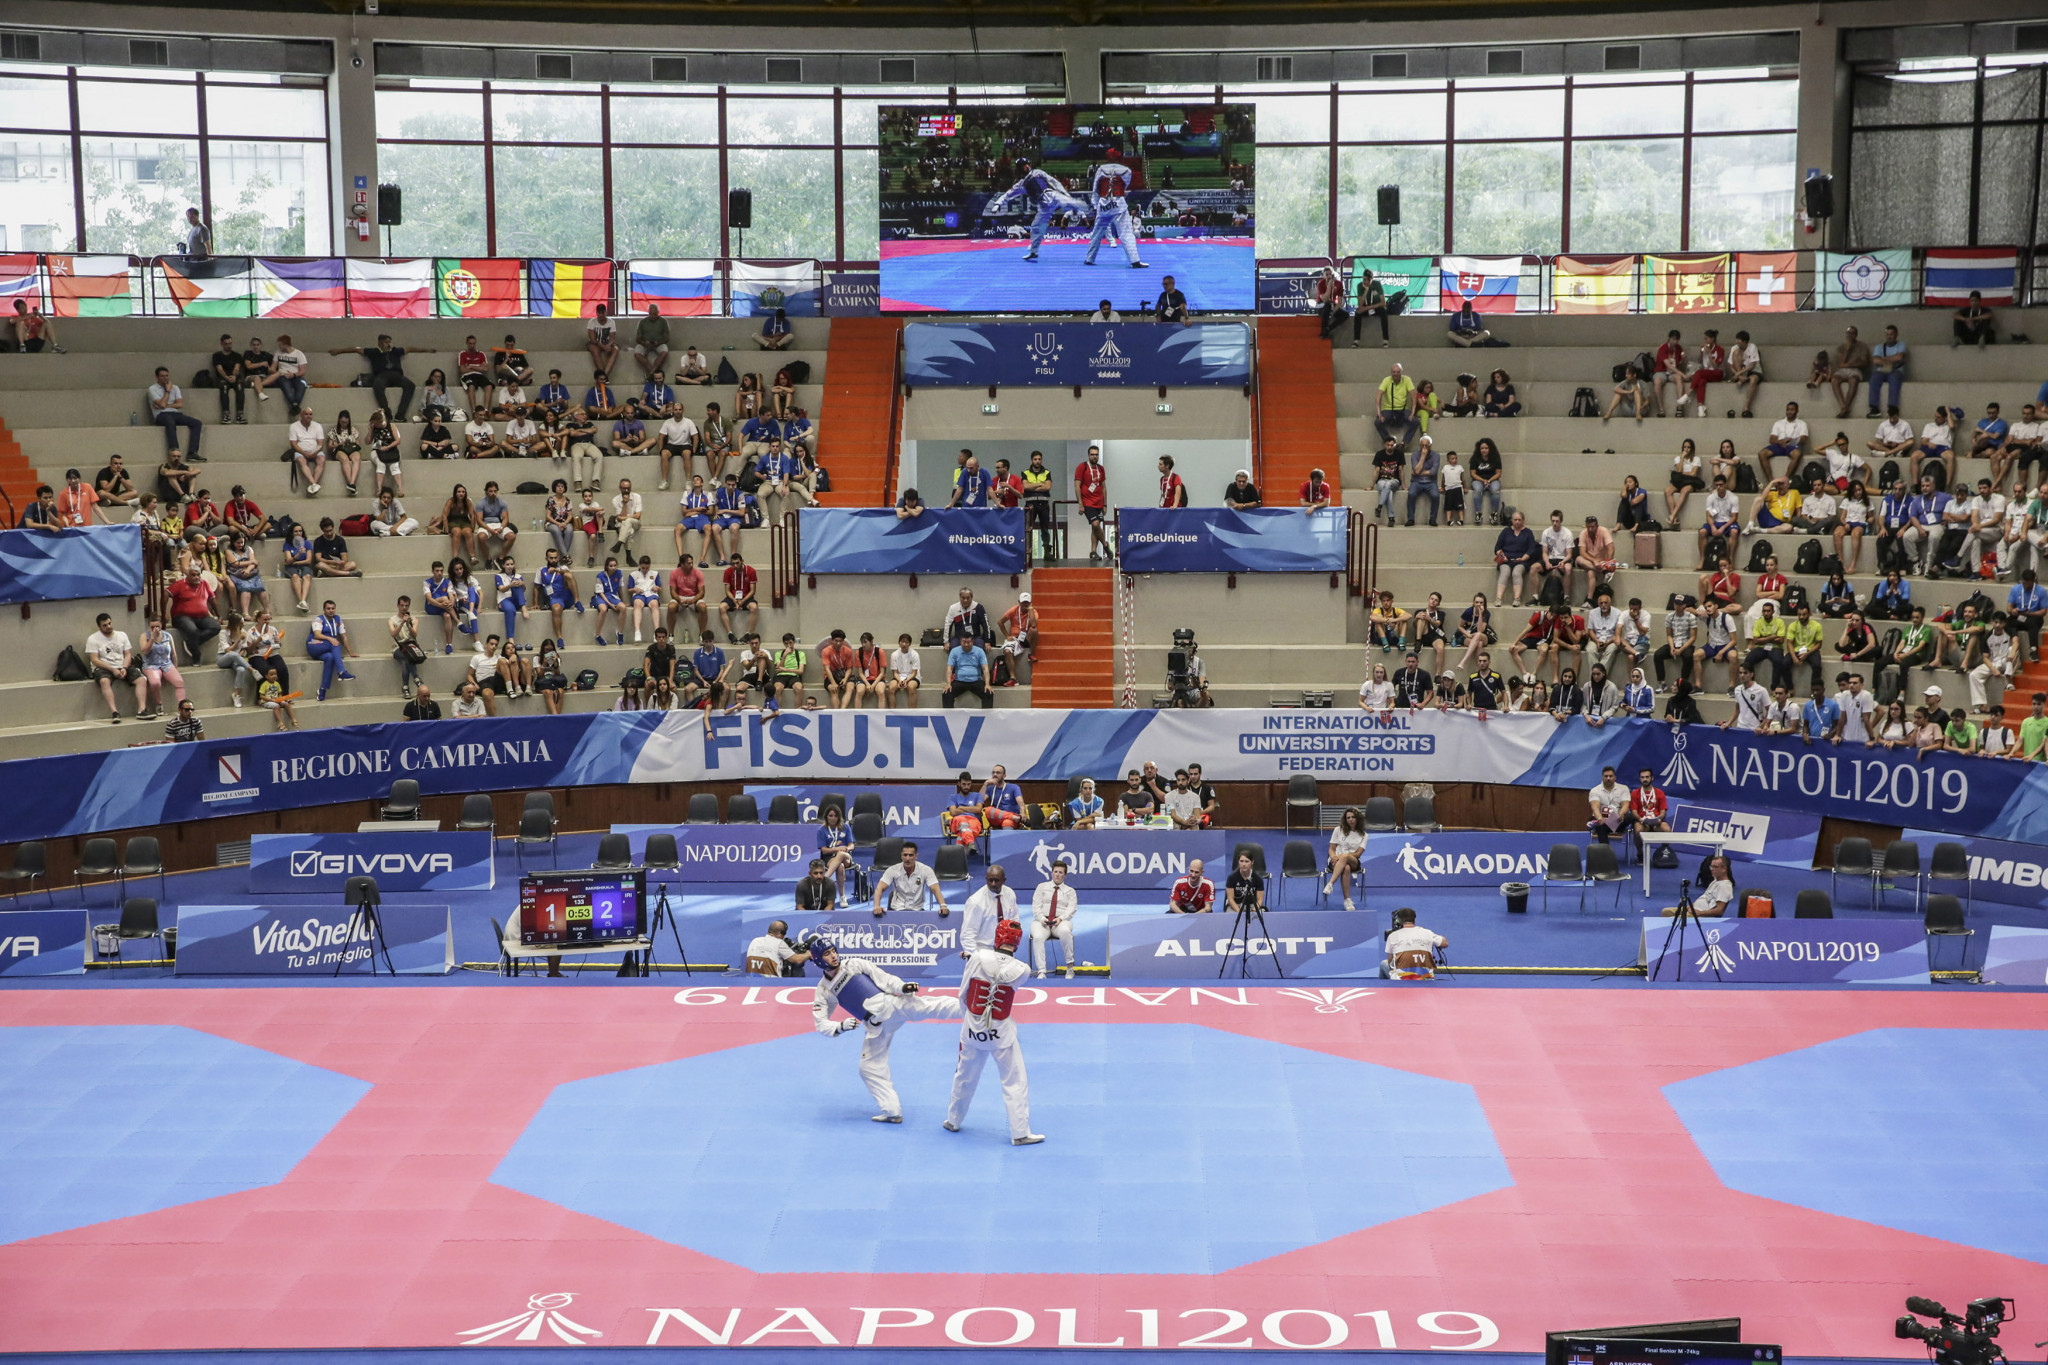 Three sets of medals were awarded in taekwondo at Palazzetto dello Sport in Casoria ©Naples 2019